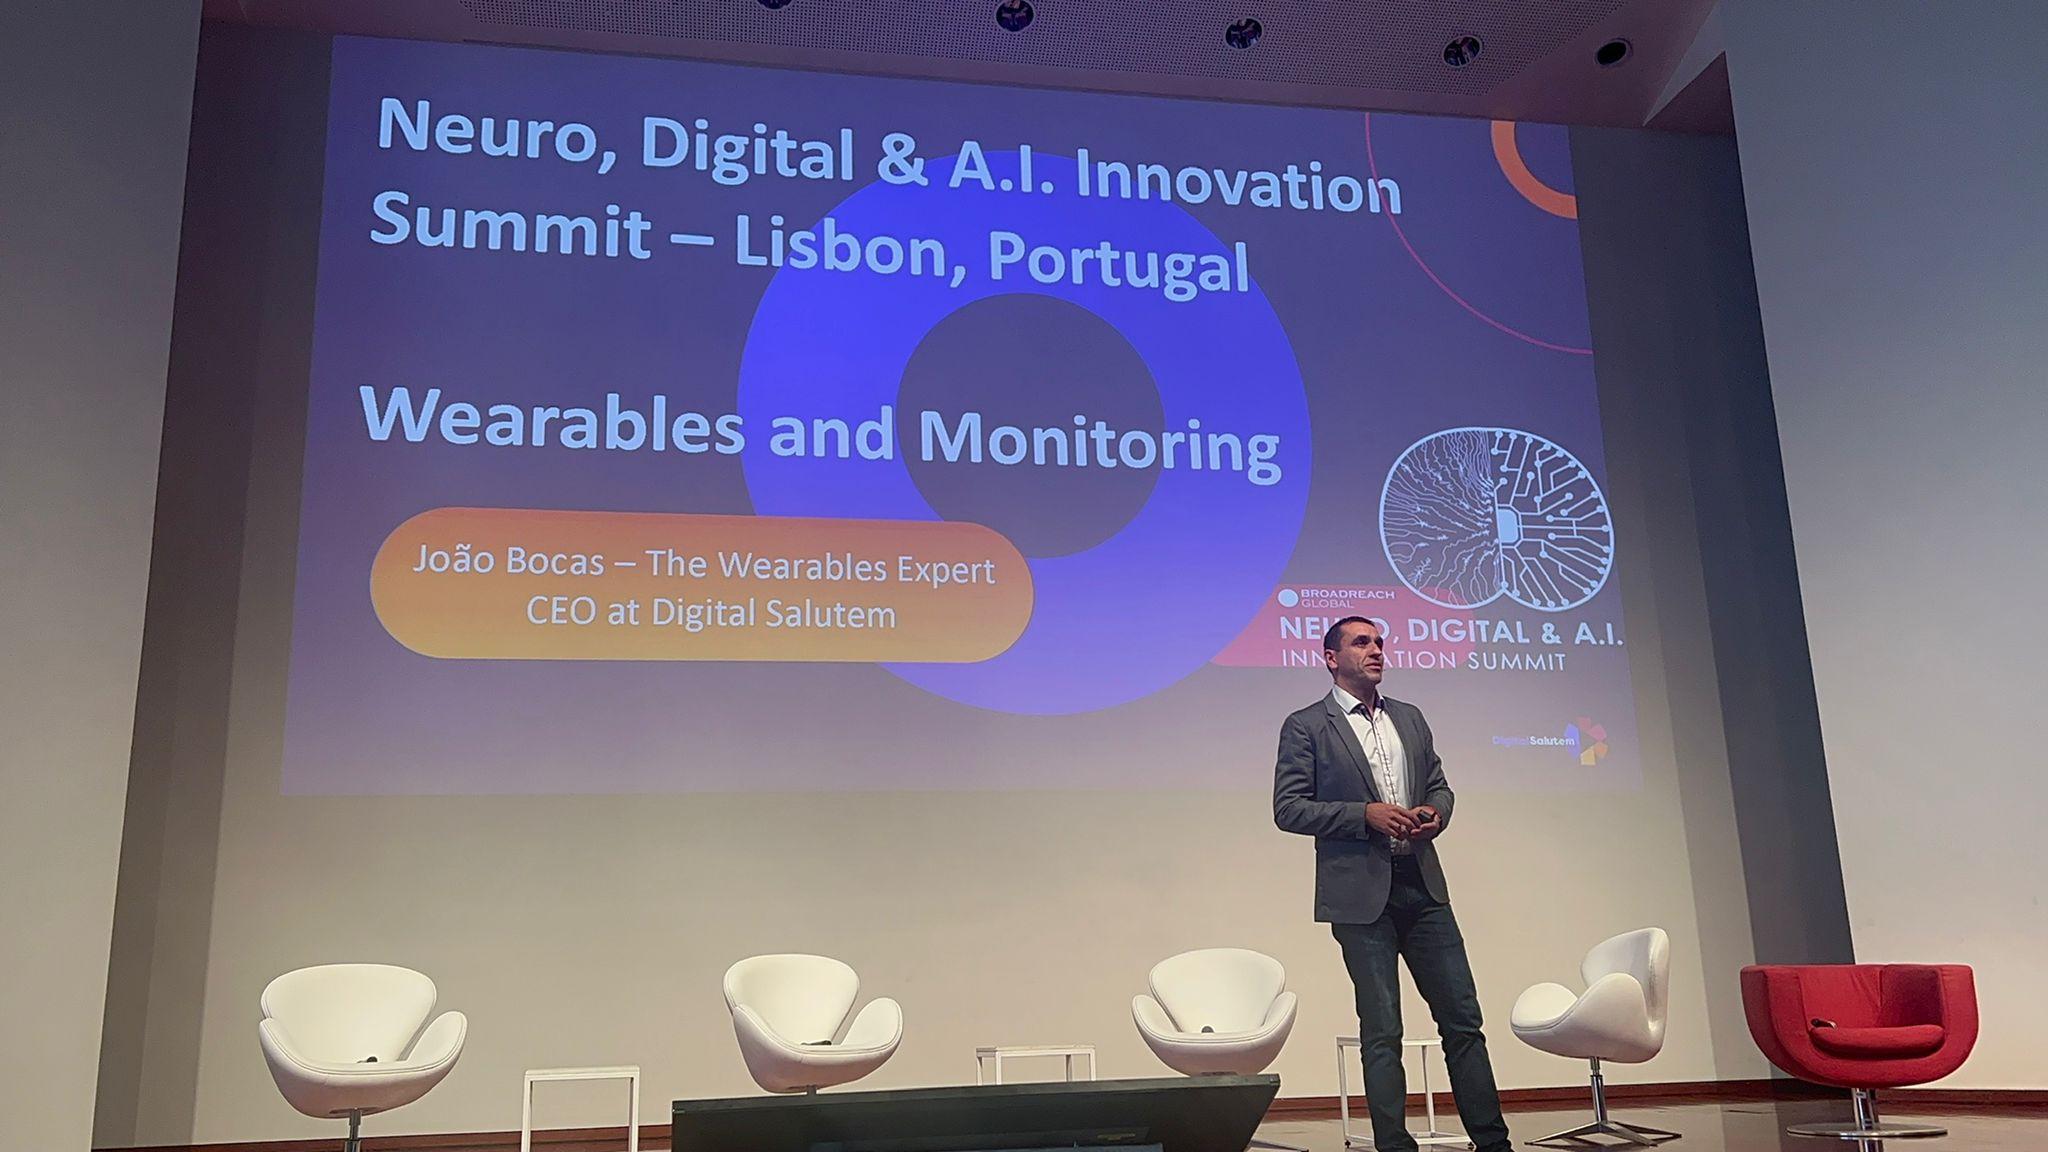 The Neuro Digital AI and Innovation Summit 5